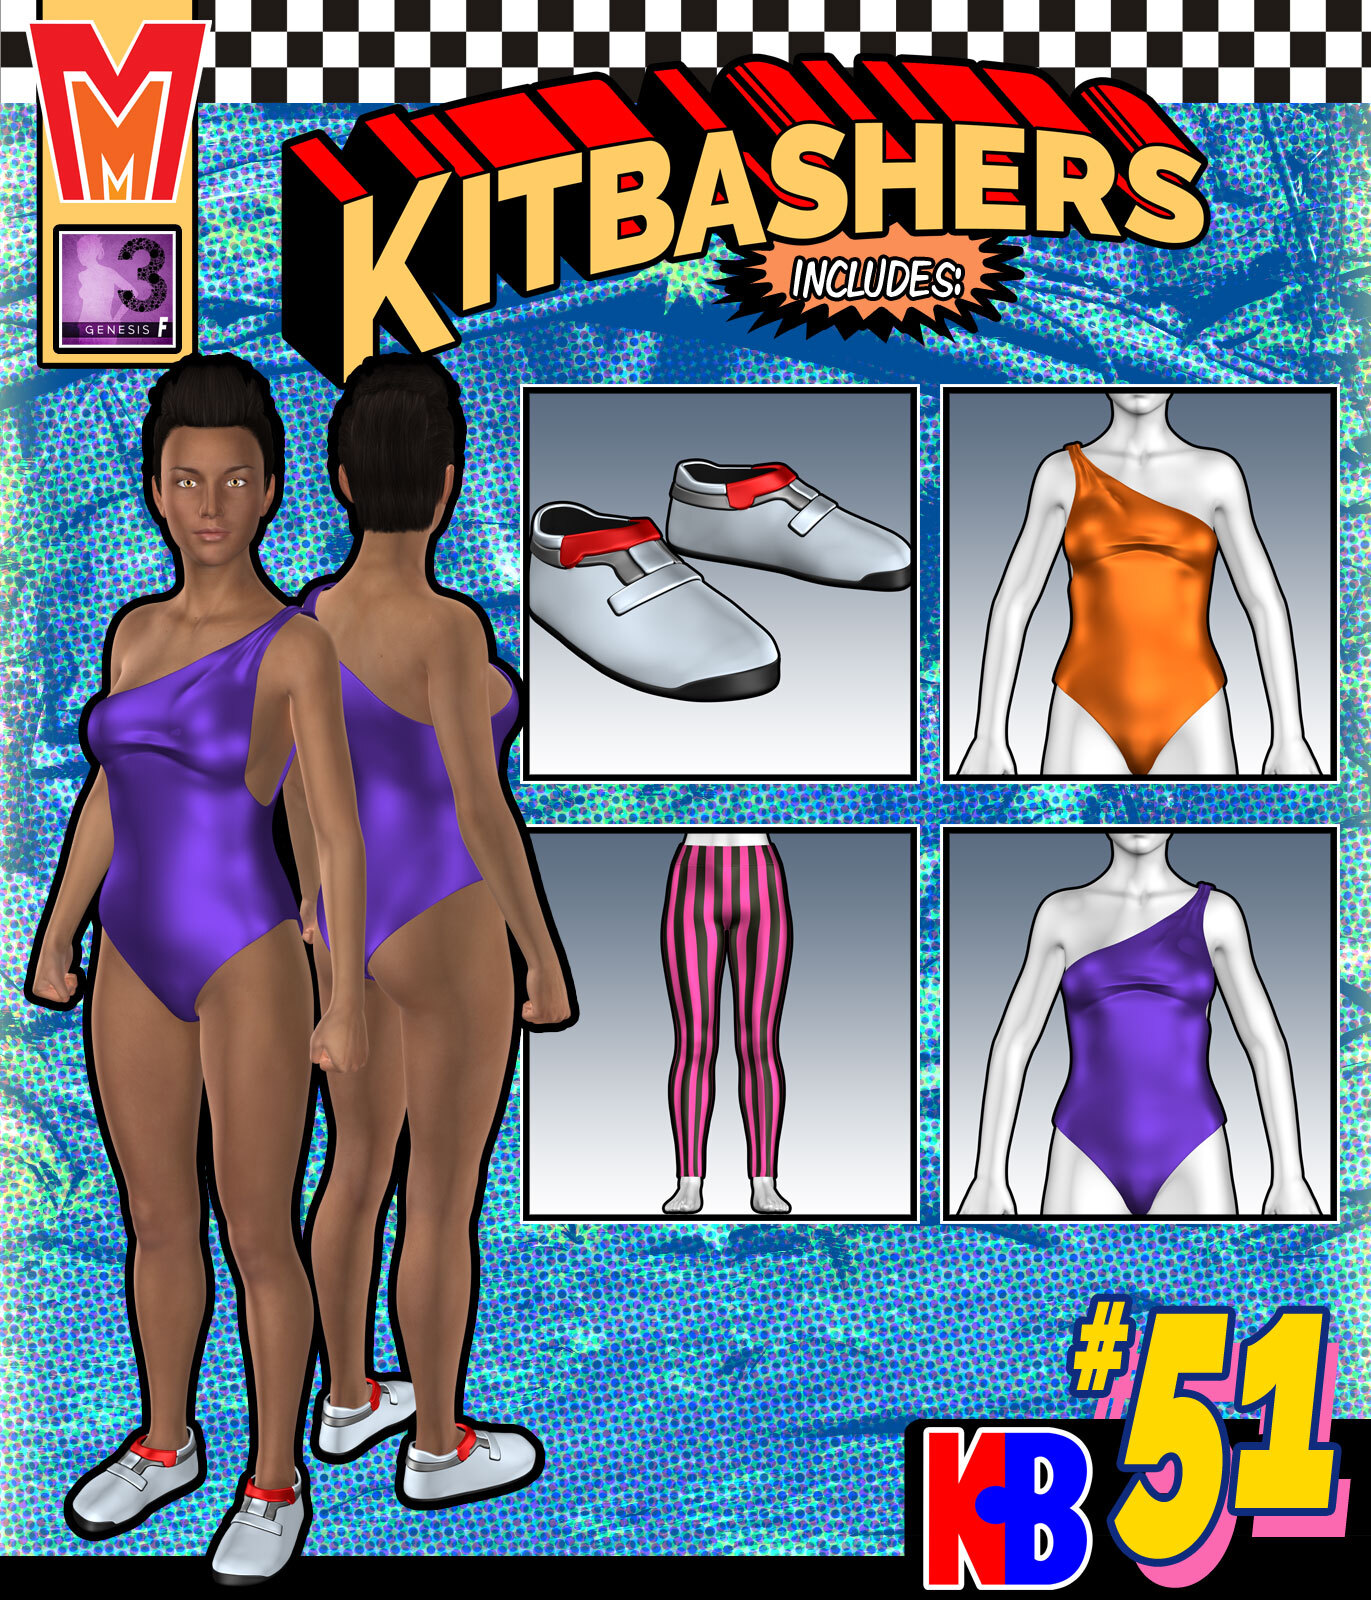 Kitbashers 051 MMG3F by: MightyMite, 3D Models by Daz 3D